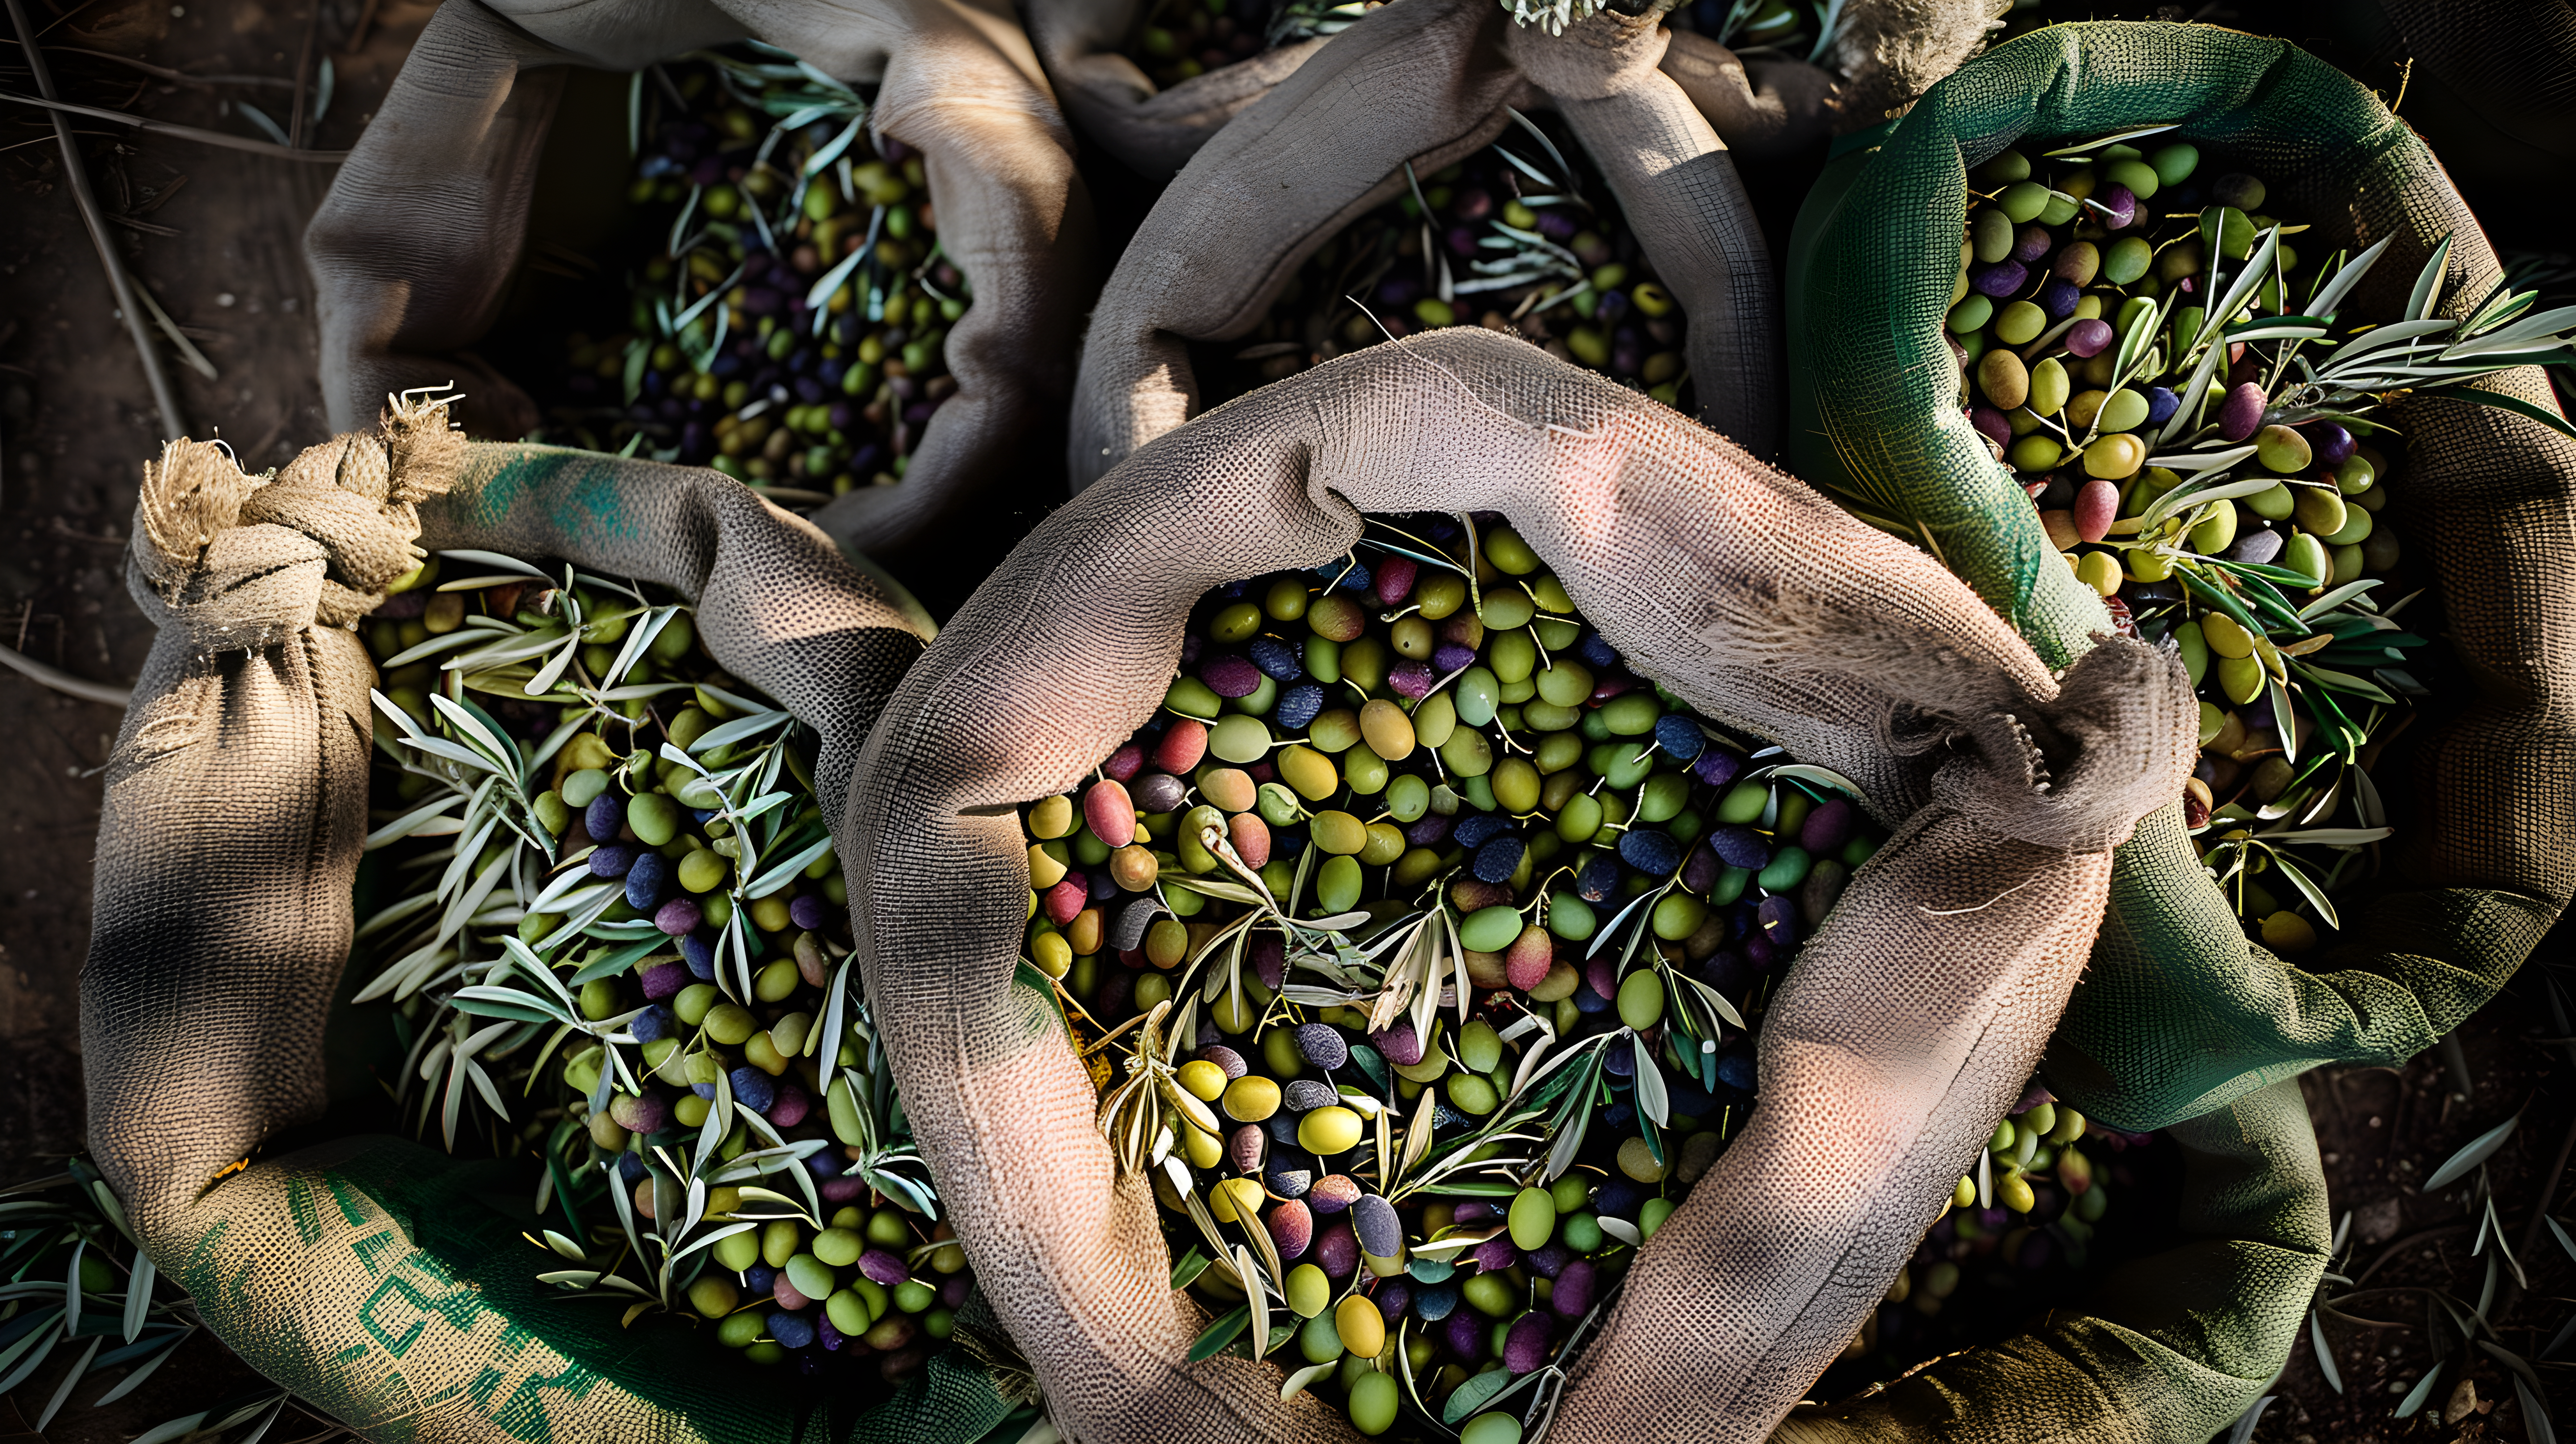 Olive Farming in Israel